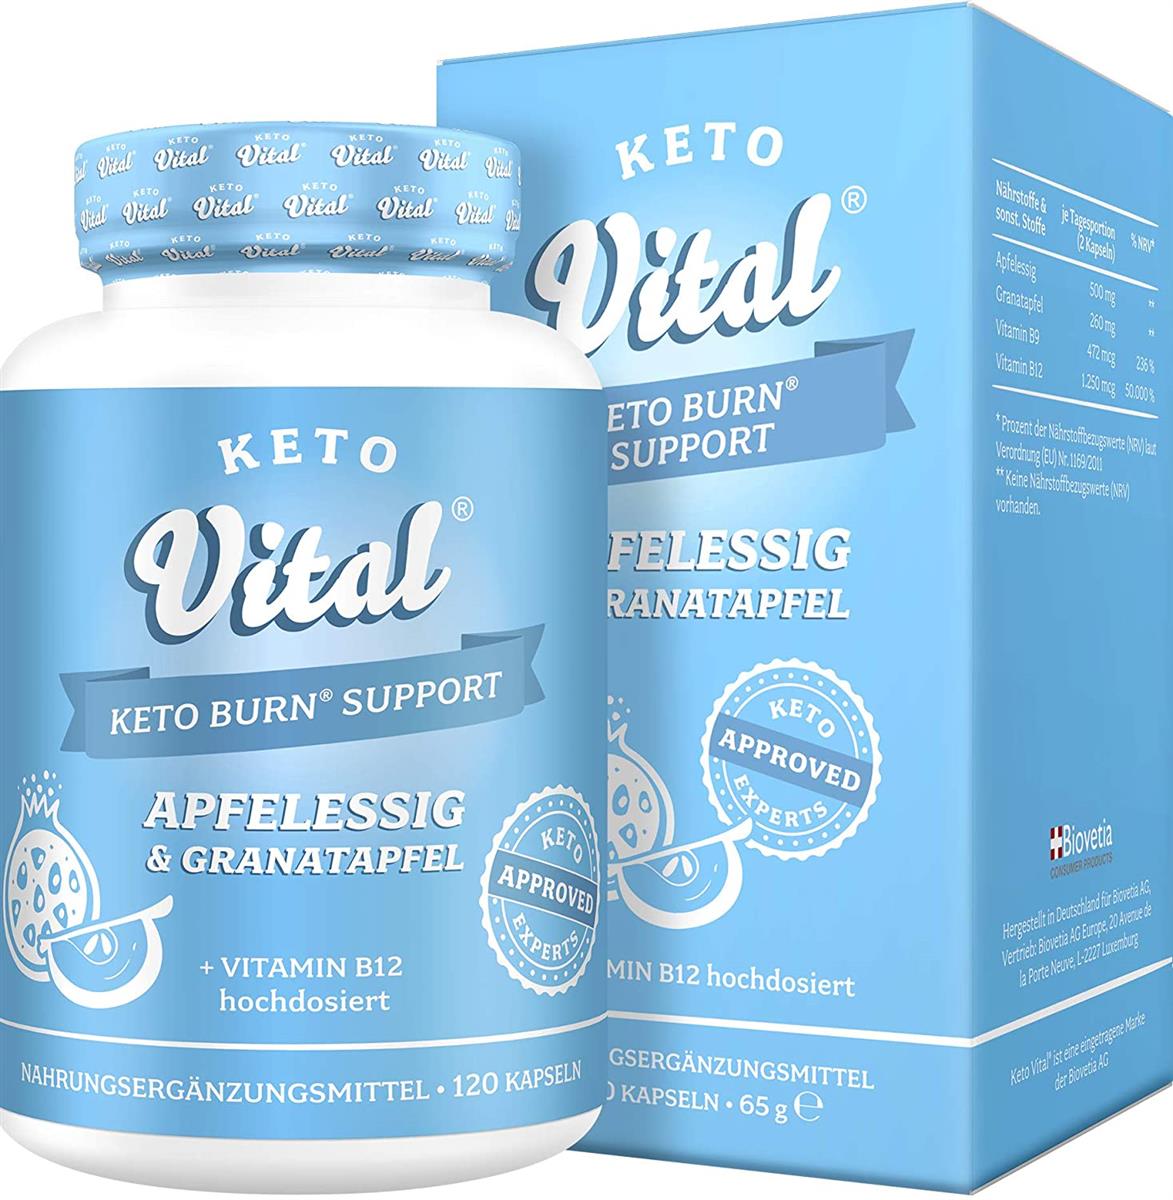 Keto Vital Keto Burn Support vegan mit Apfelessig und Granatapfel während ketogener Diät, 120 Kapseln im 2 Monatsvorrat